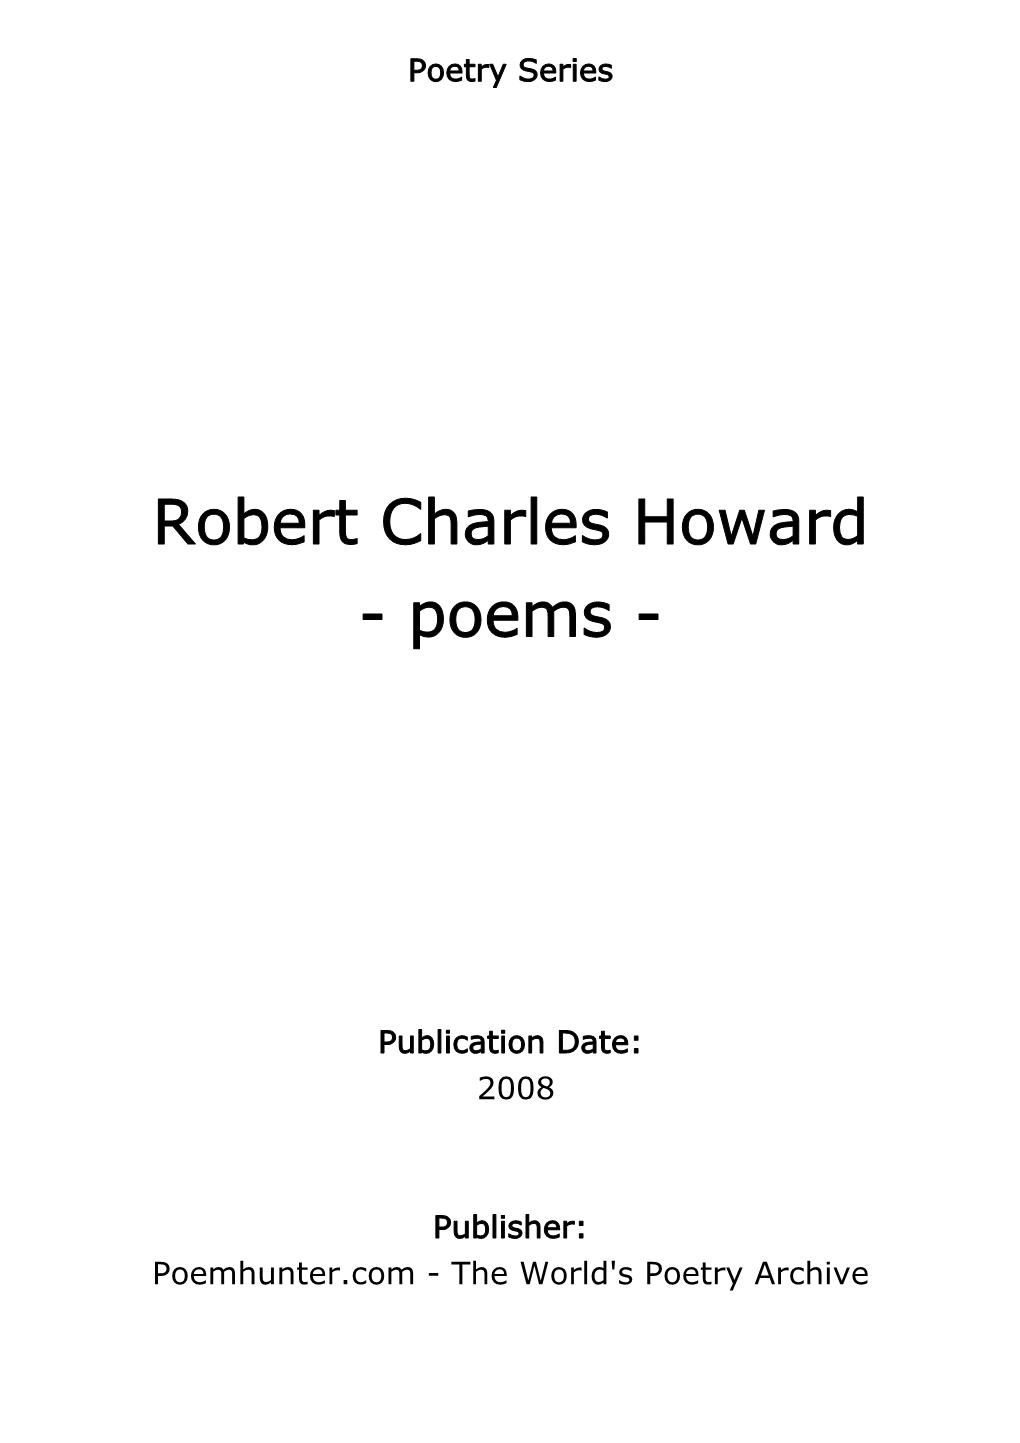 Robert Charles Howard - Poems